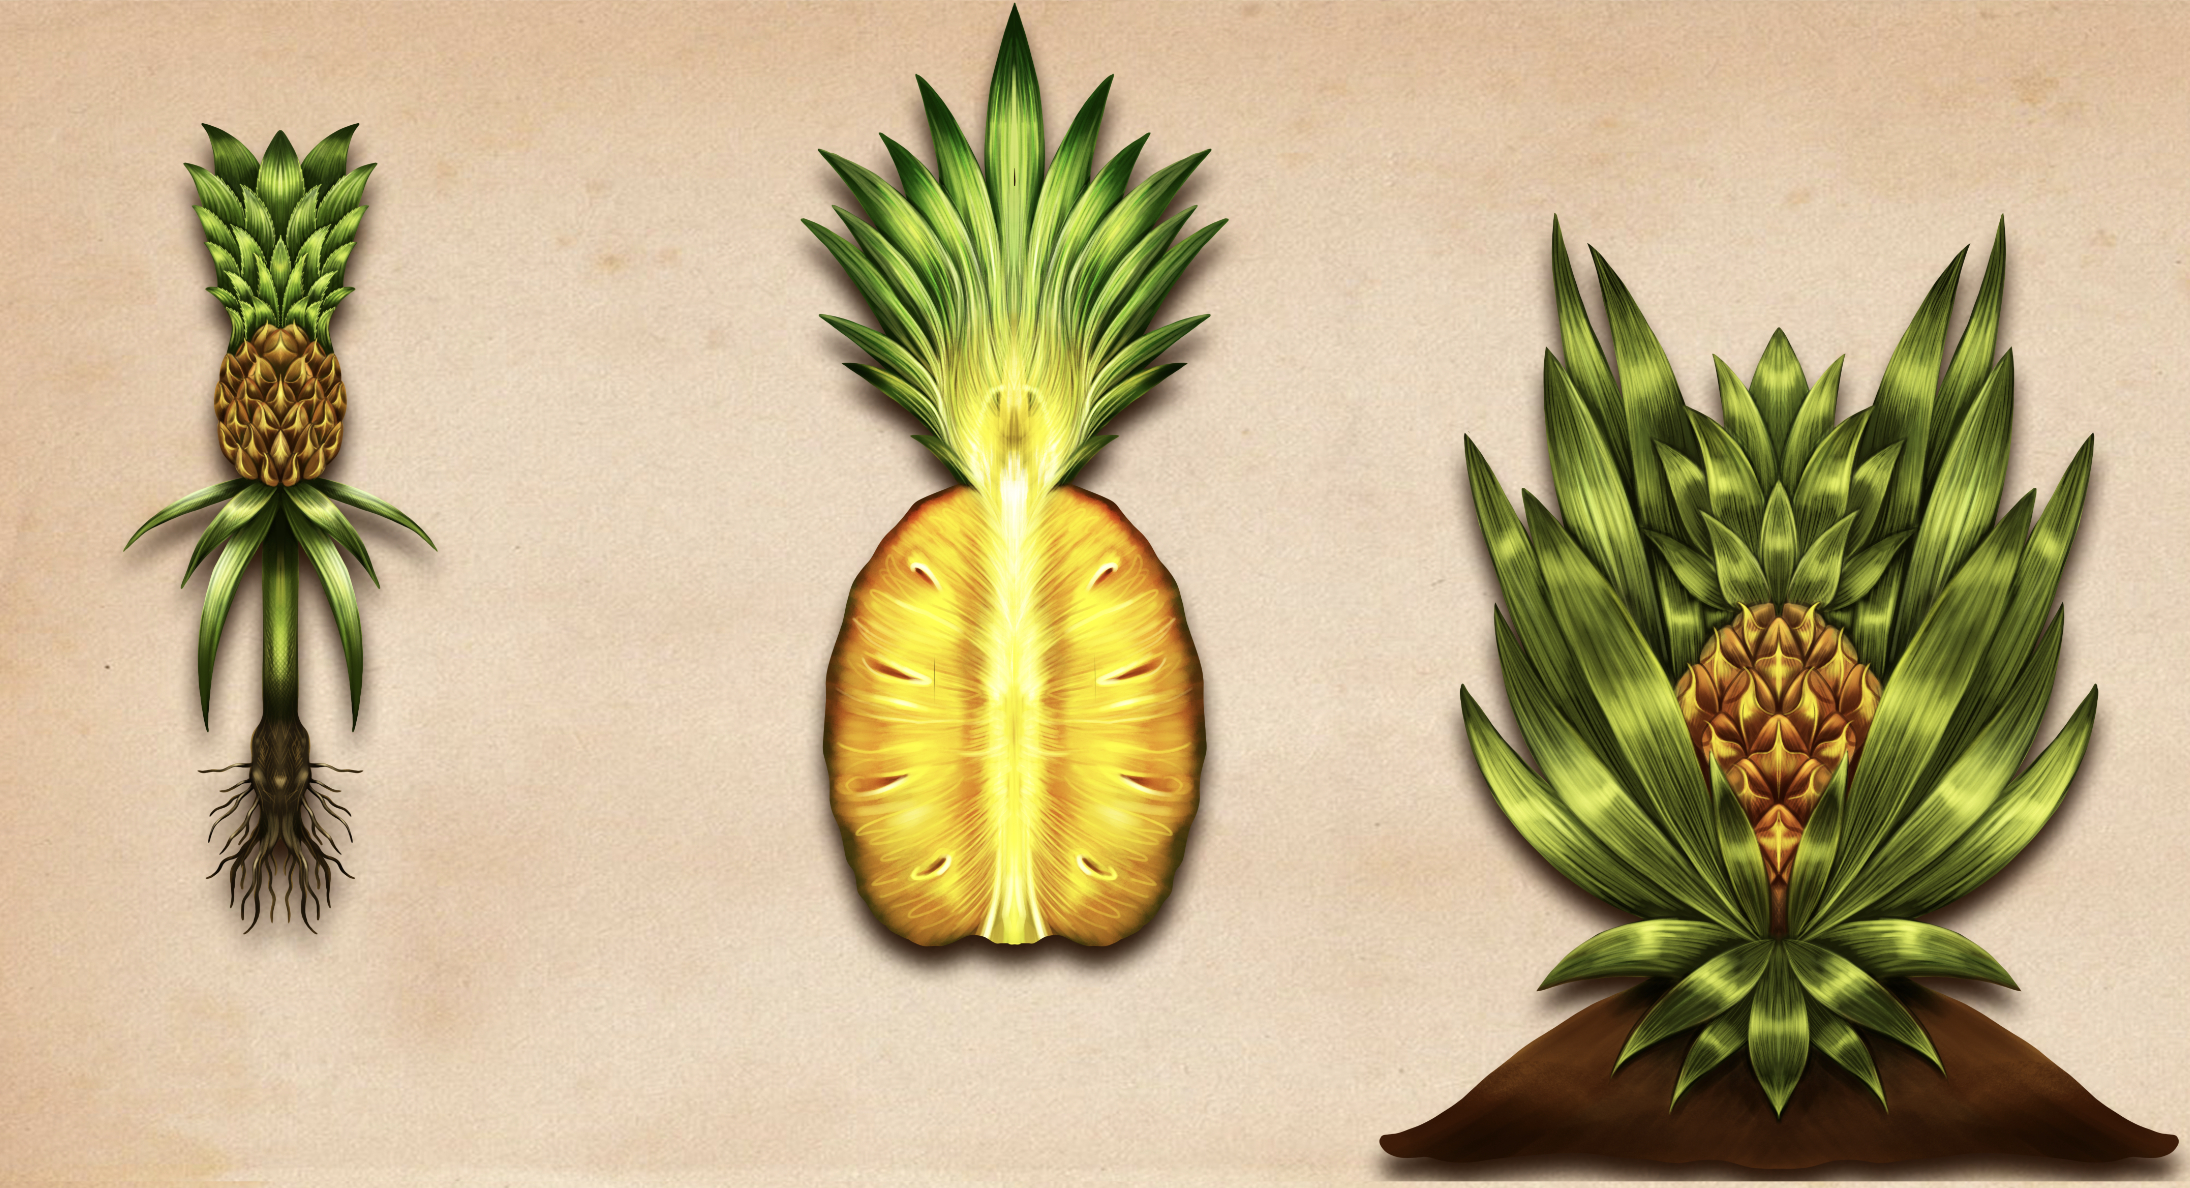 ananas.jpg